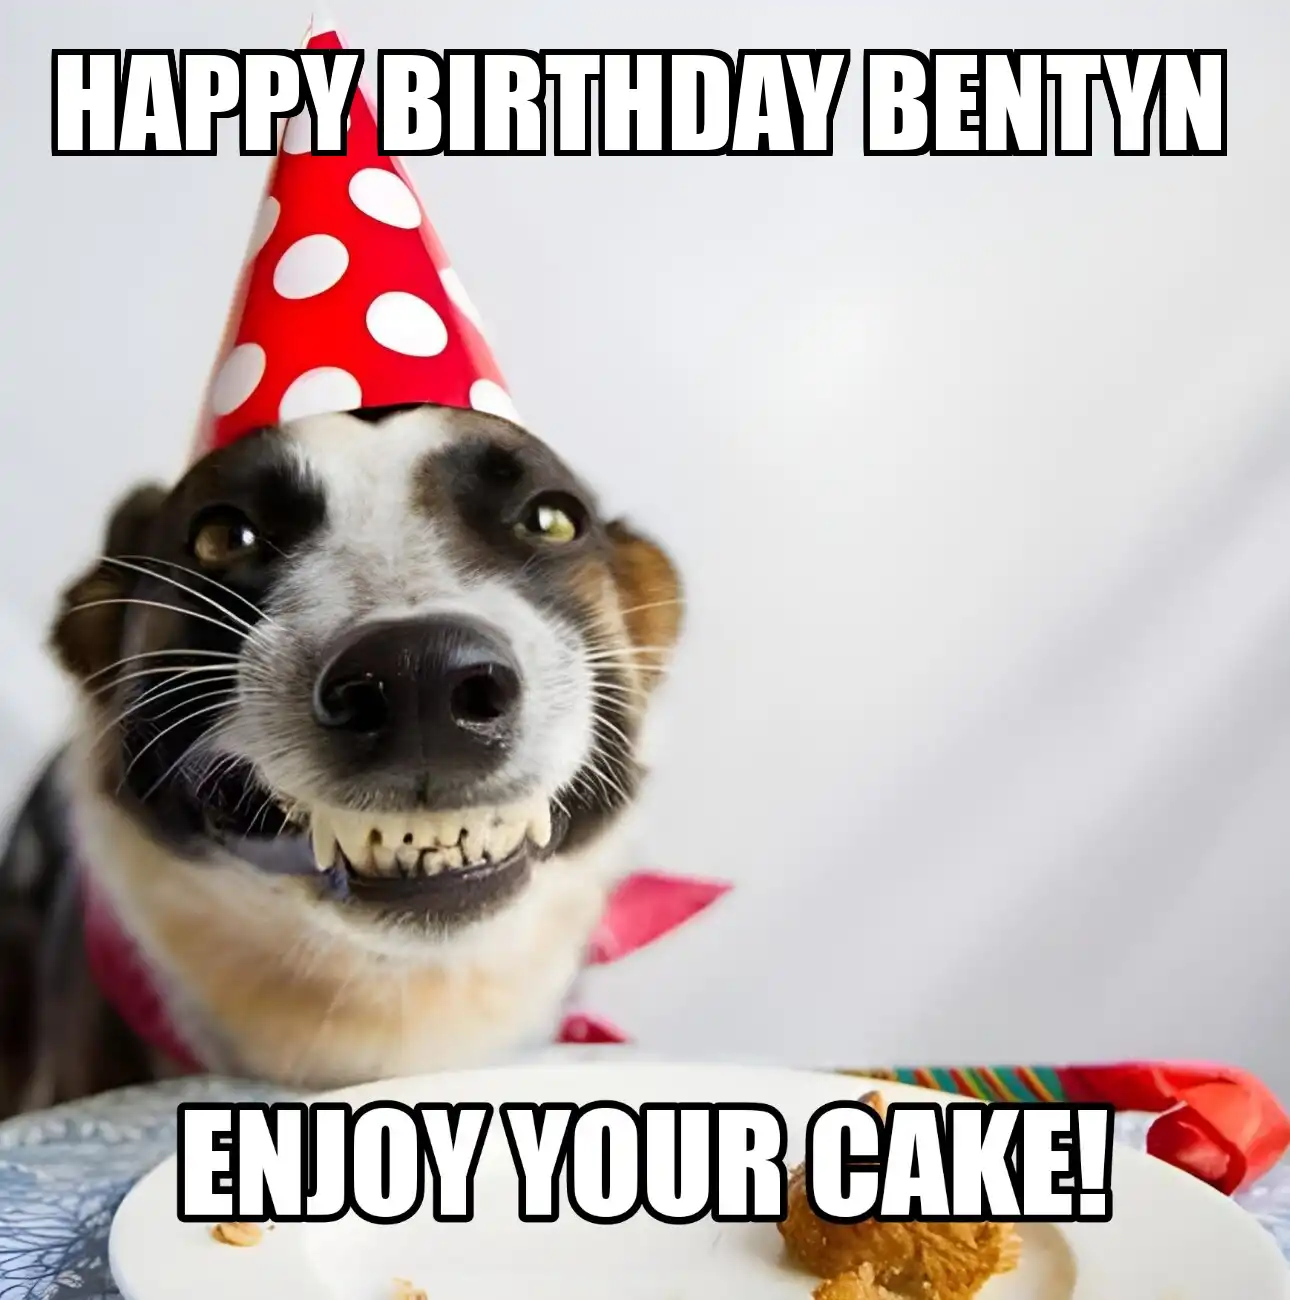 Happy Birthday Bentyn Enjoy Your Cake Dog Meme